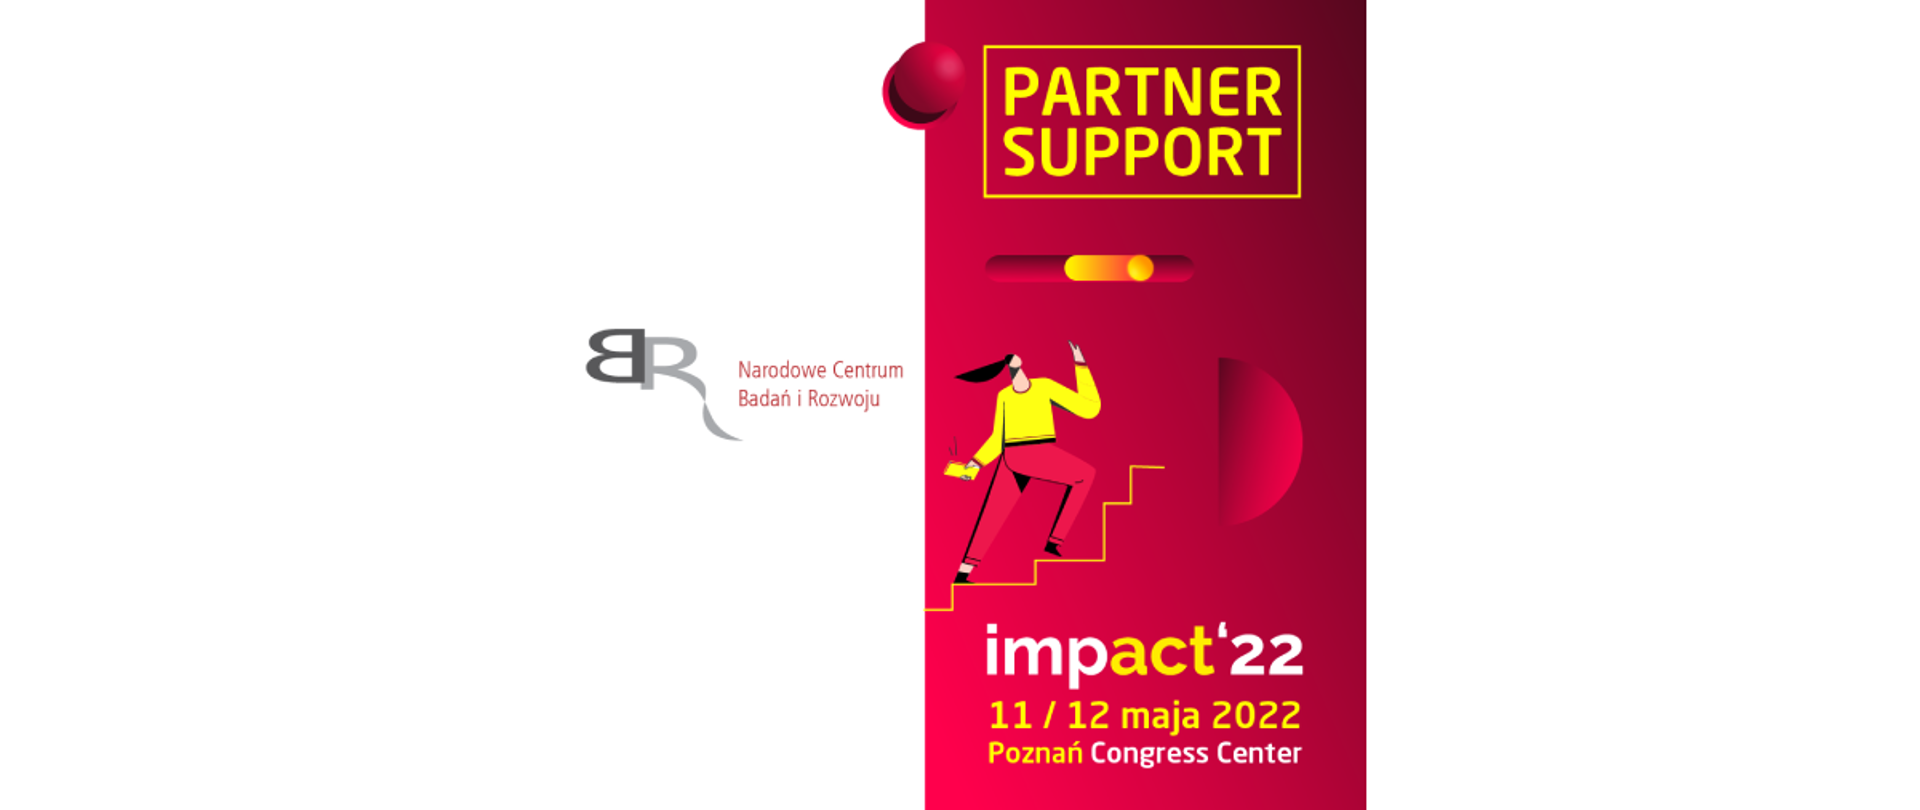 Partner Support
impact'22
11/12 maja 2022
Poznań Congress Center
Narodowe Centrum Badań i Rozwoju